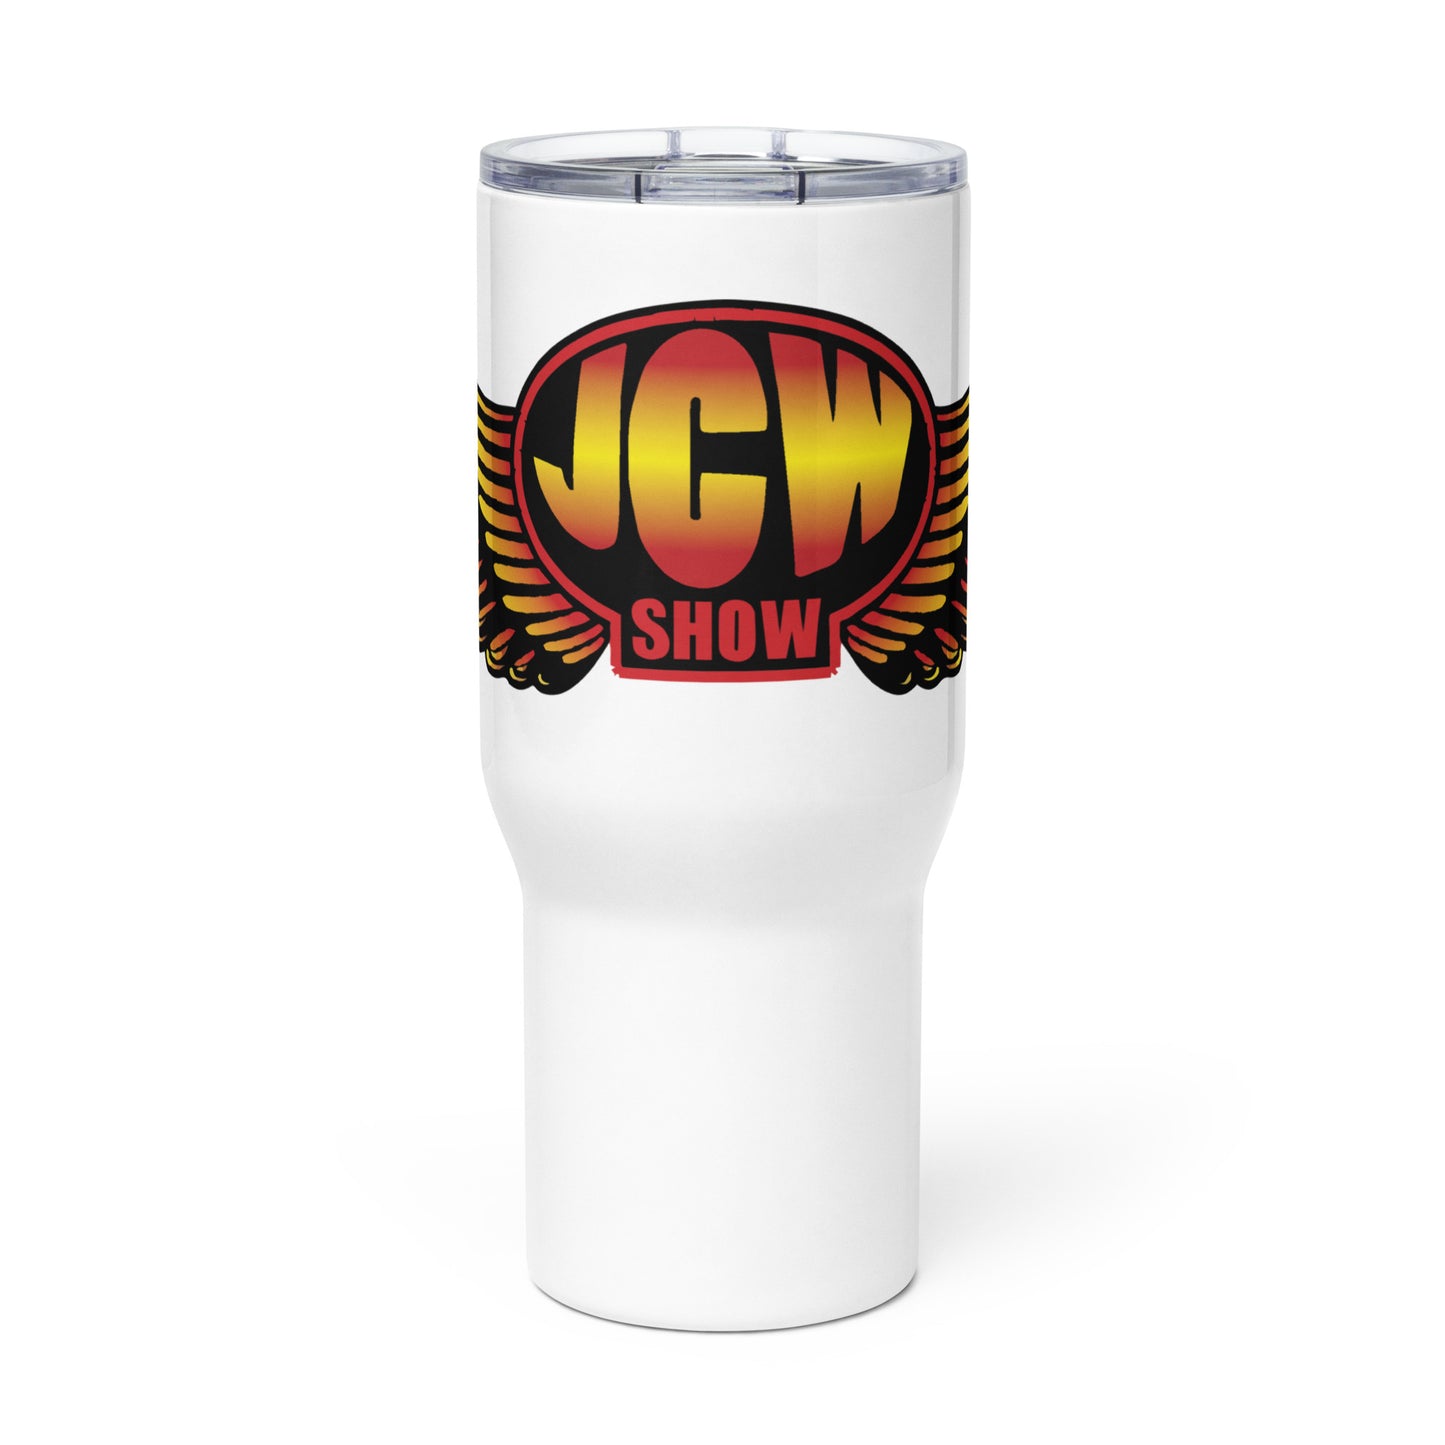 JCW Travel mug with a handle